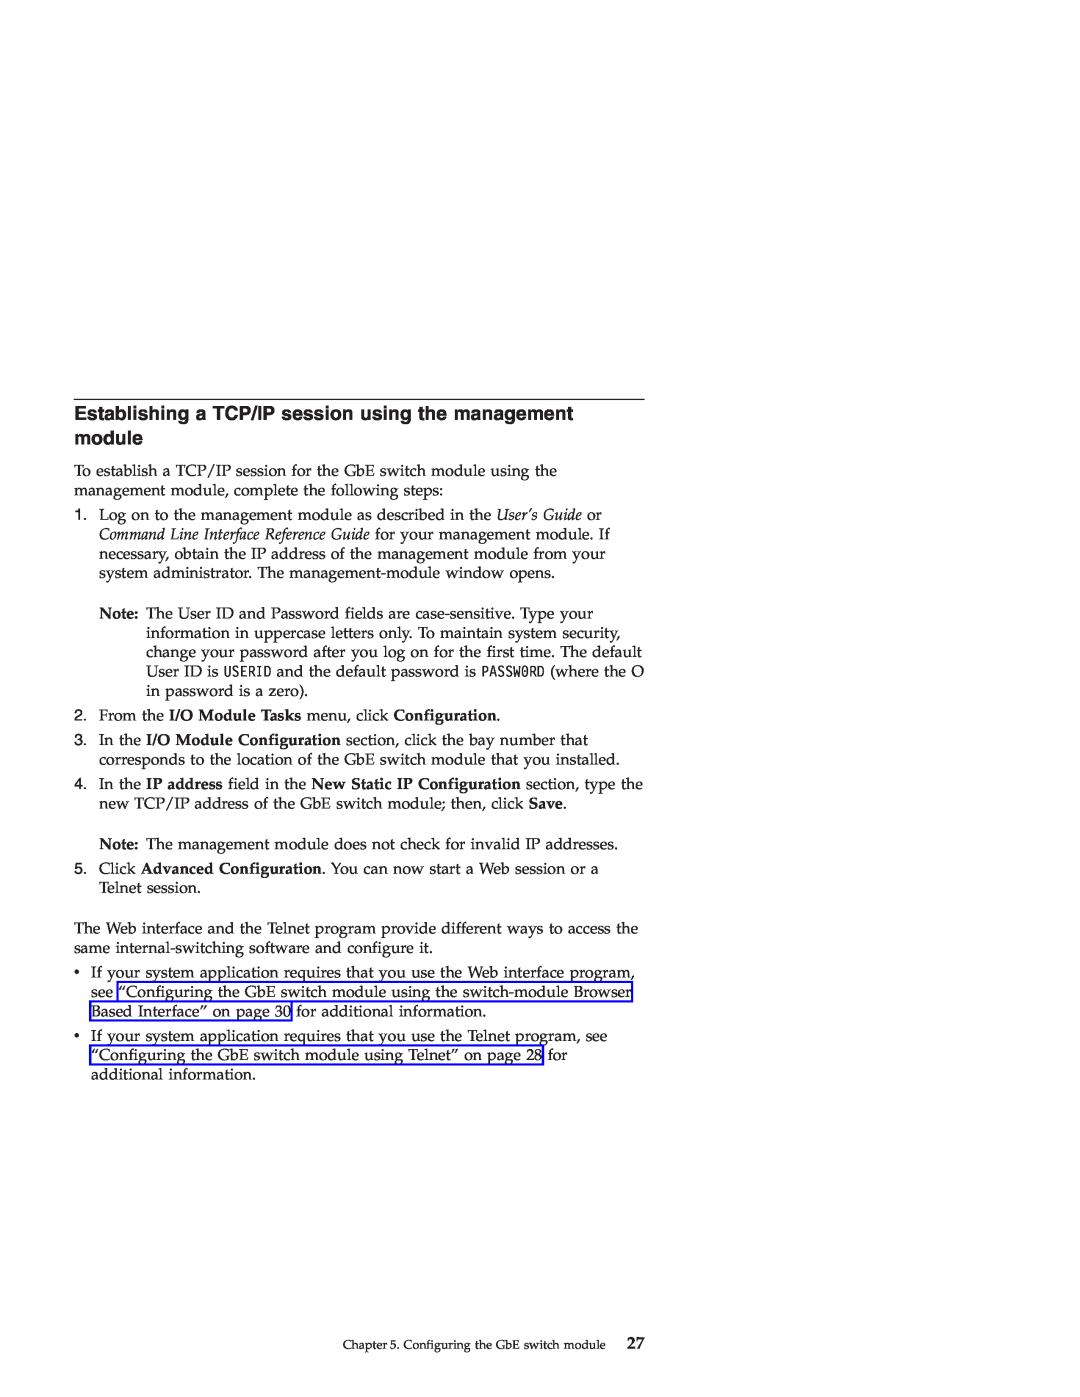 IBM Nortel 10 manual Establishing a TCP/IP session using the management module 